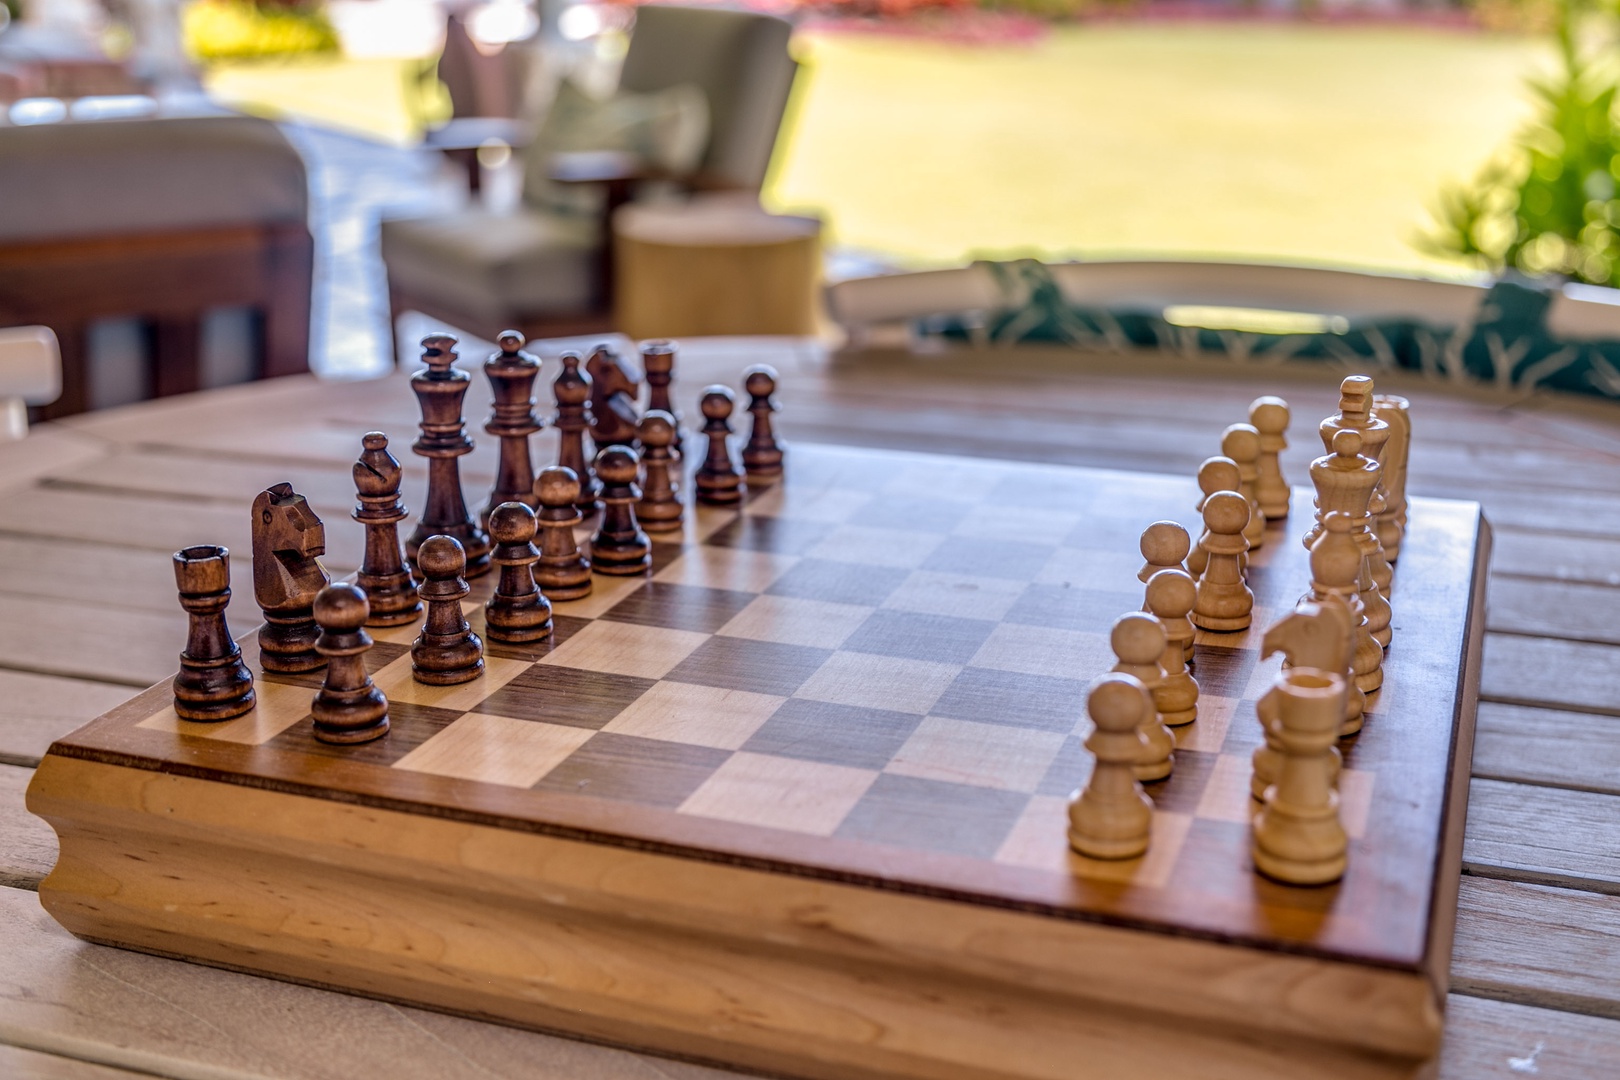 Honolulu Vacation Rentals, Hale Ola - Chess anyone?